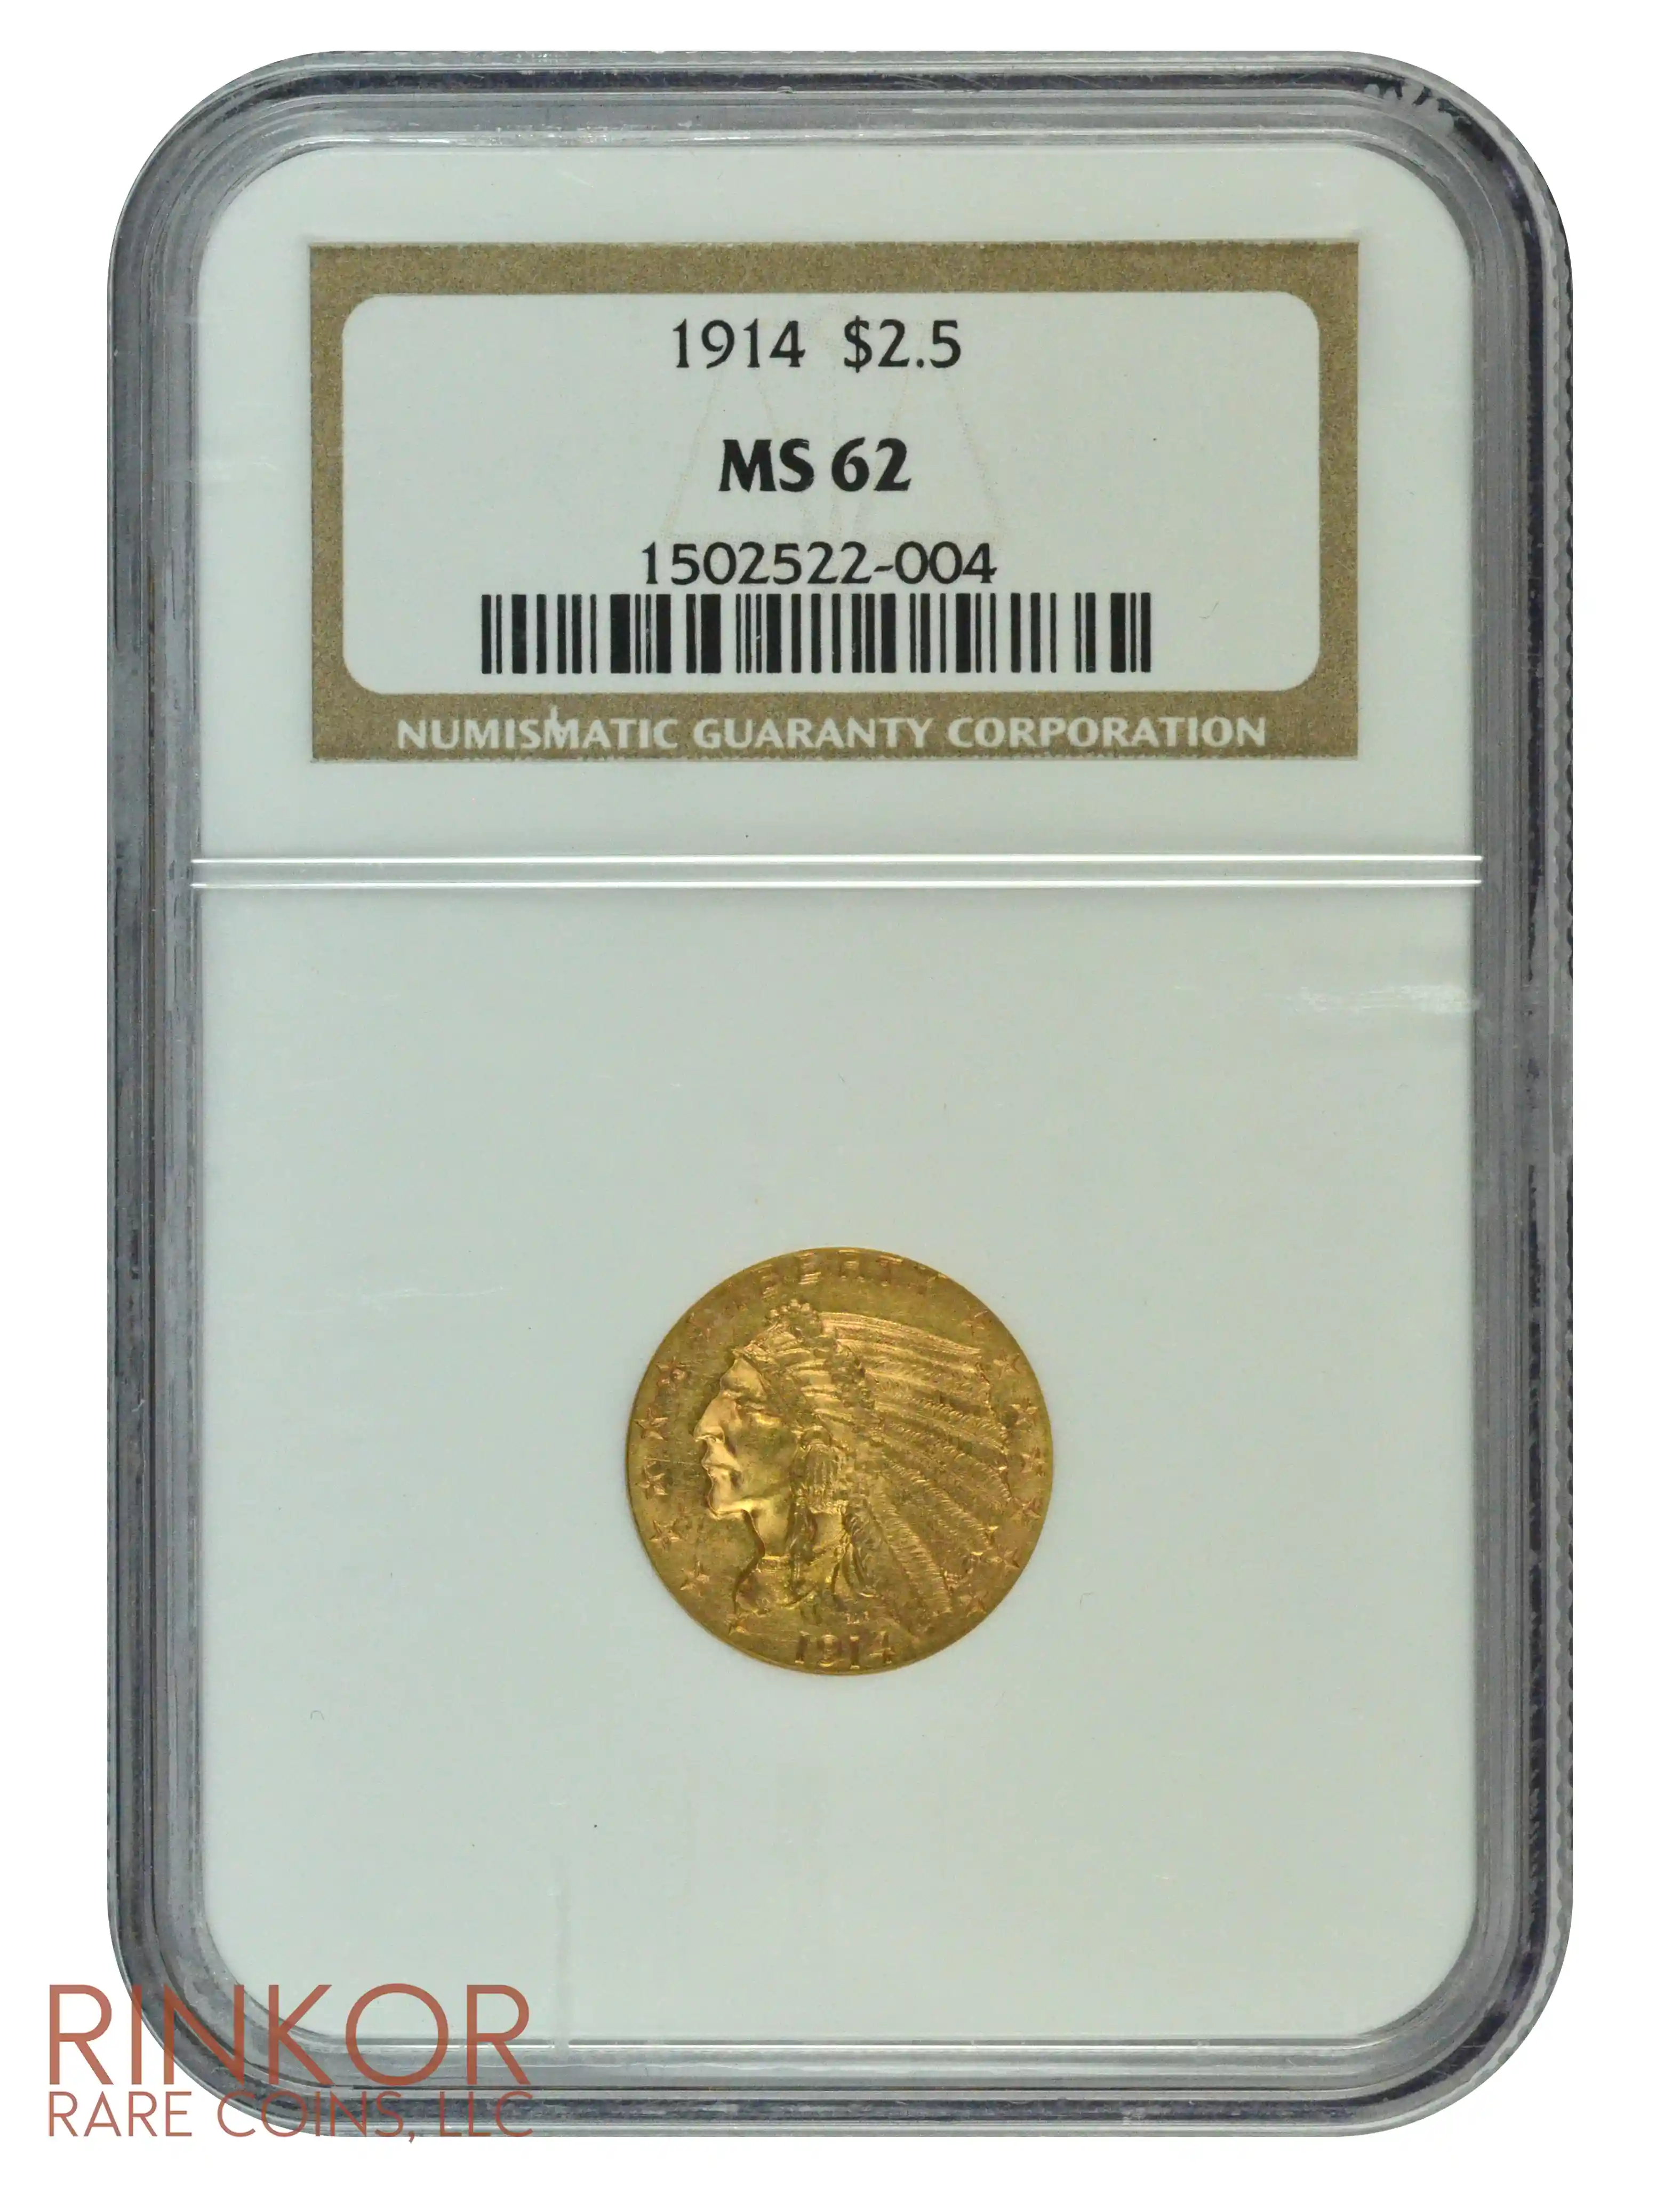 1914 $2.50 Indian Head NGC MS 62 